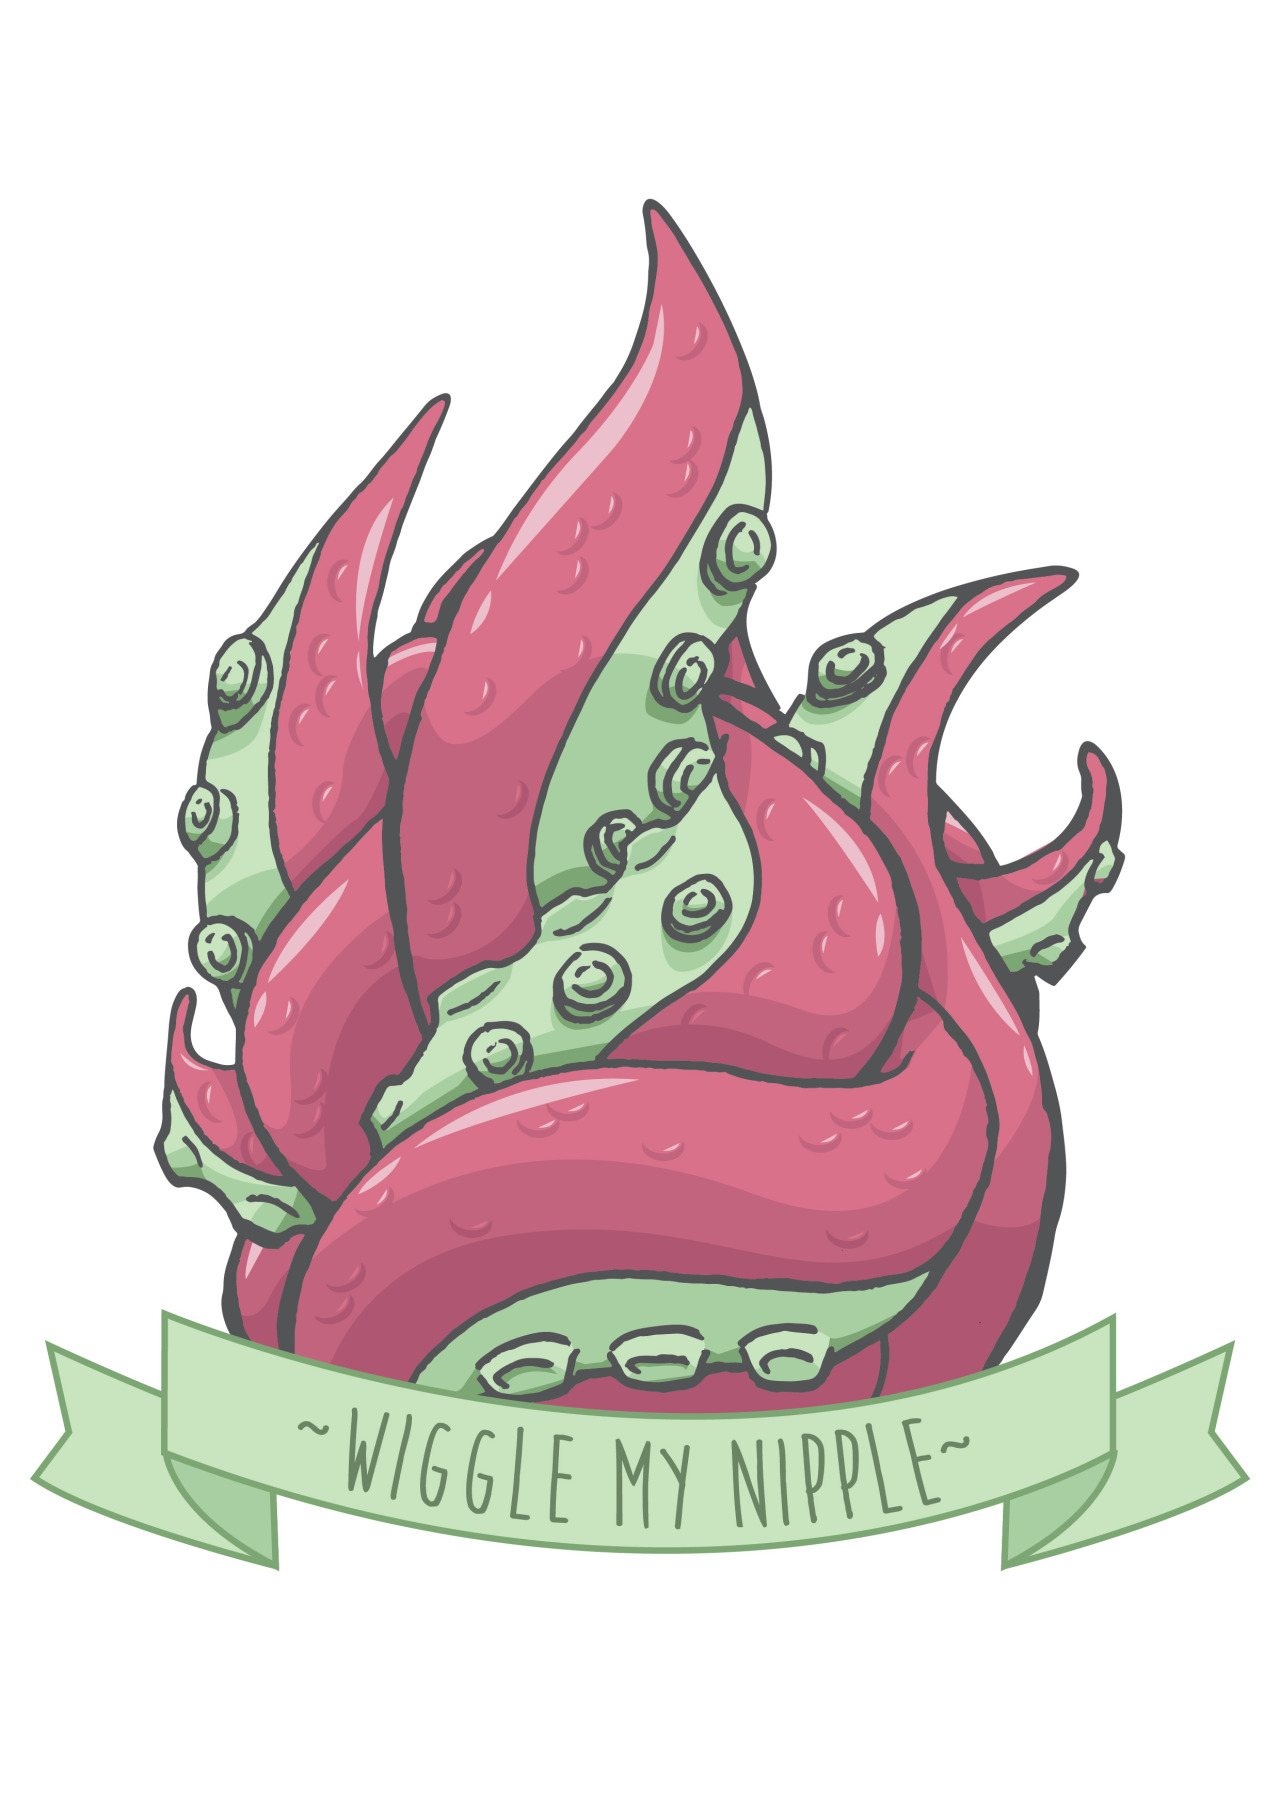 http://evilviel.tumblr.com/ Wiggle My Nipple https://twitter.com/vielephant